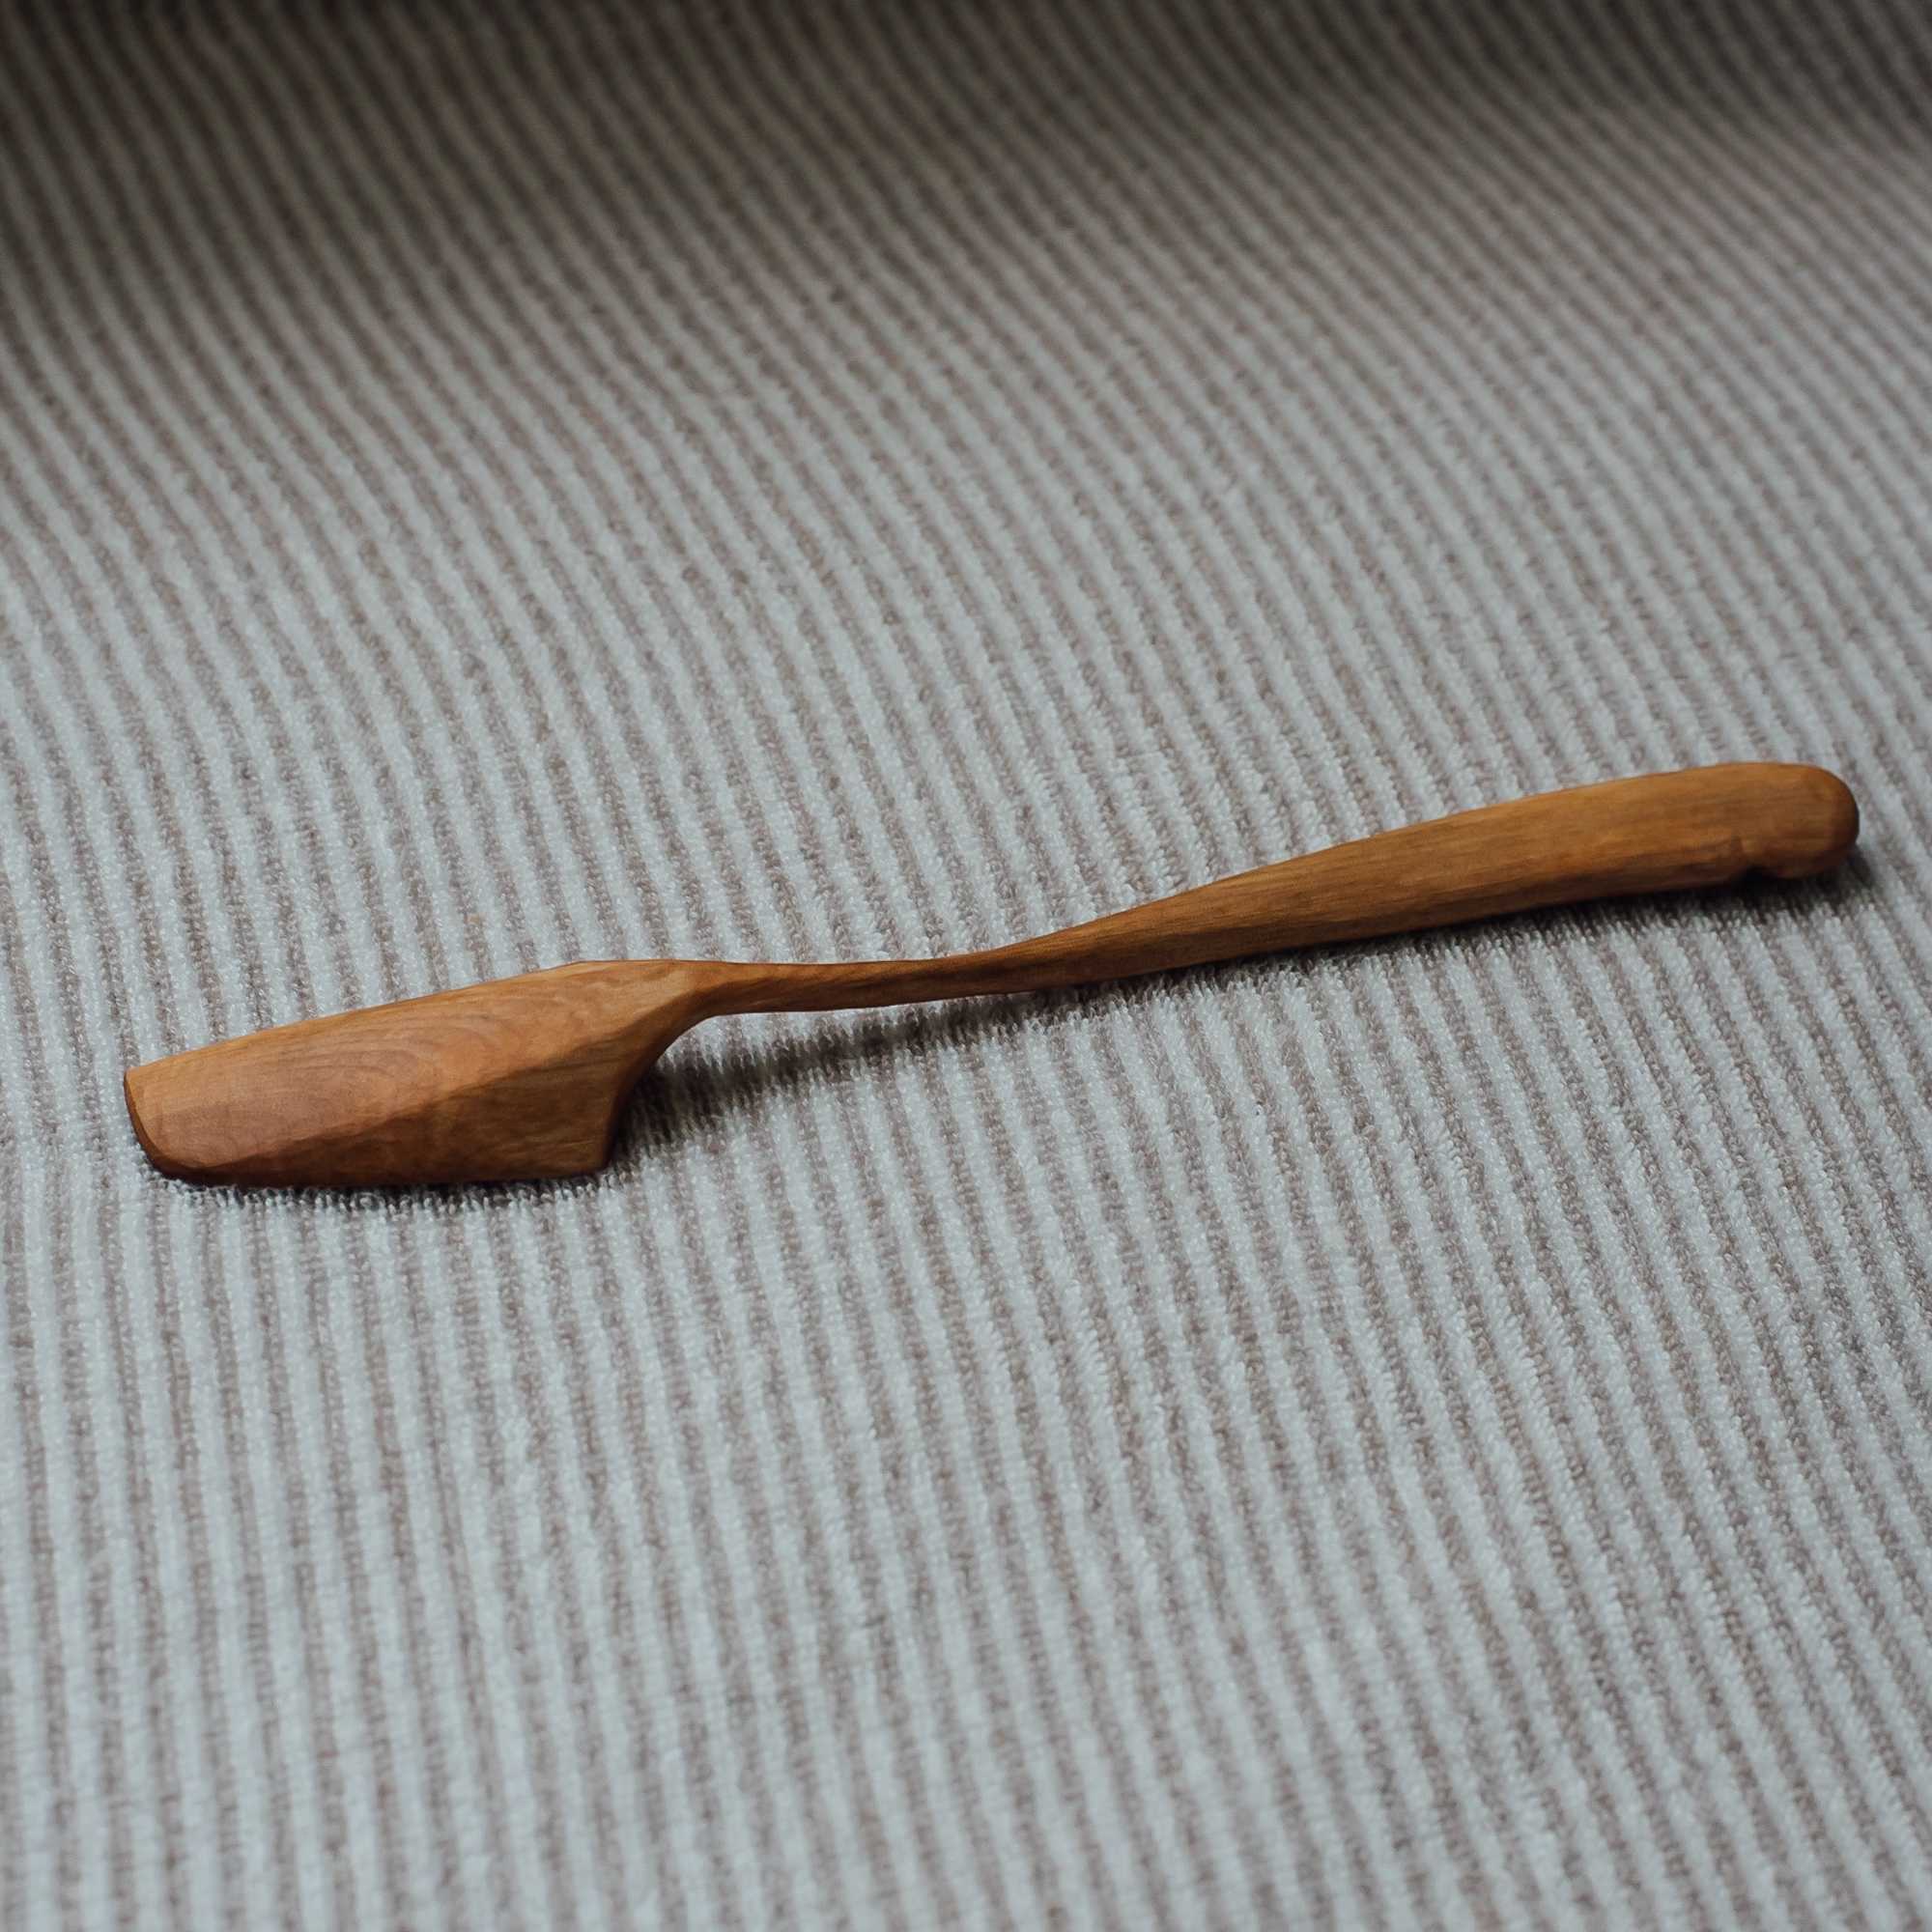 Birch spoon